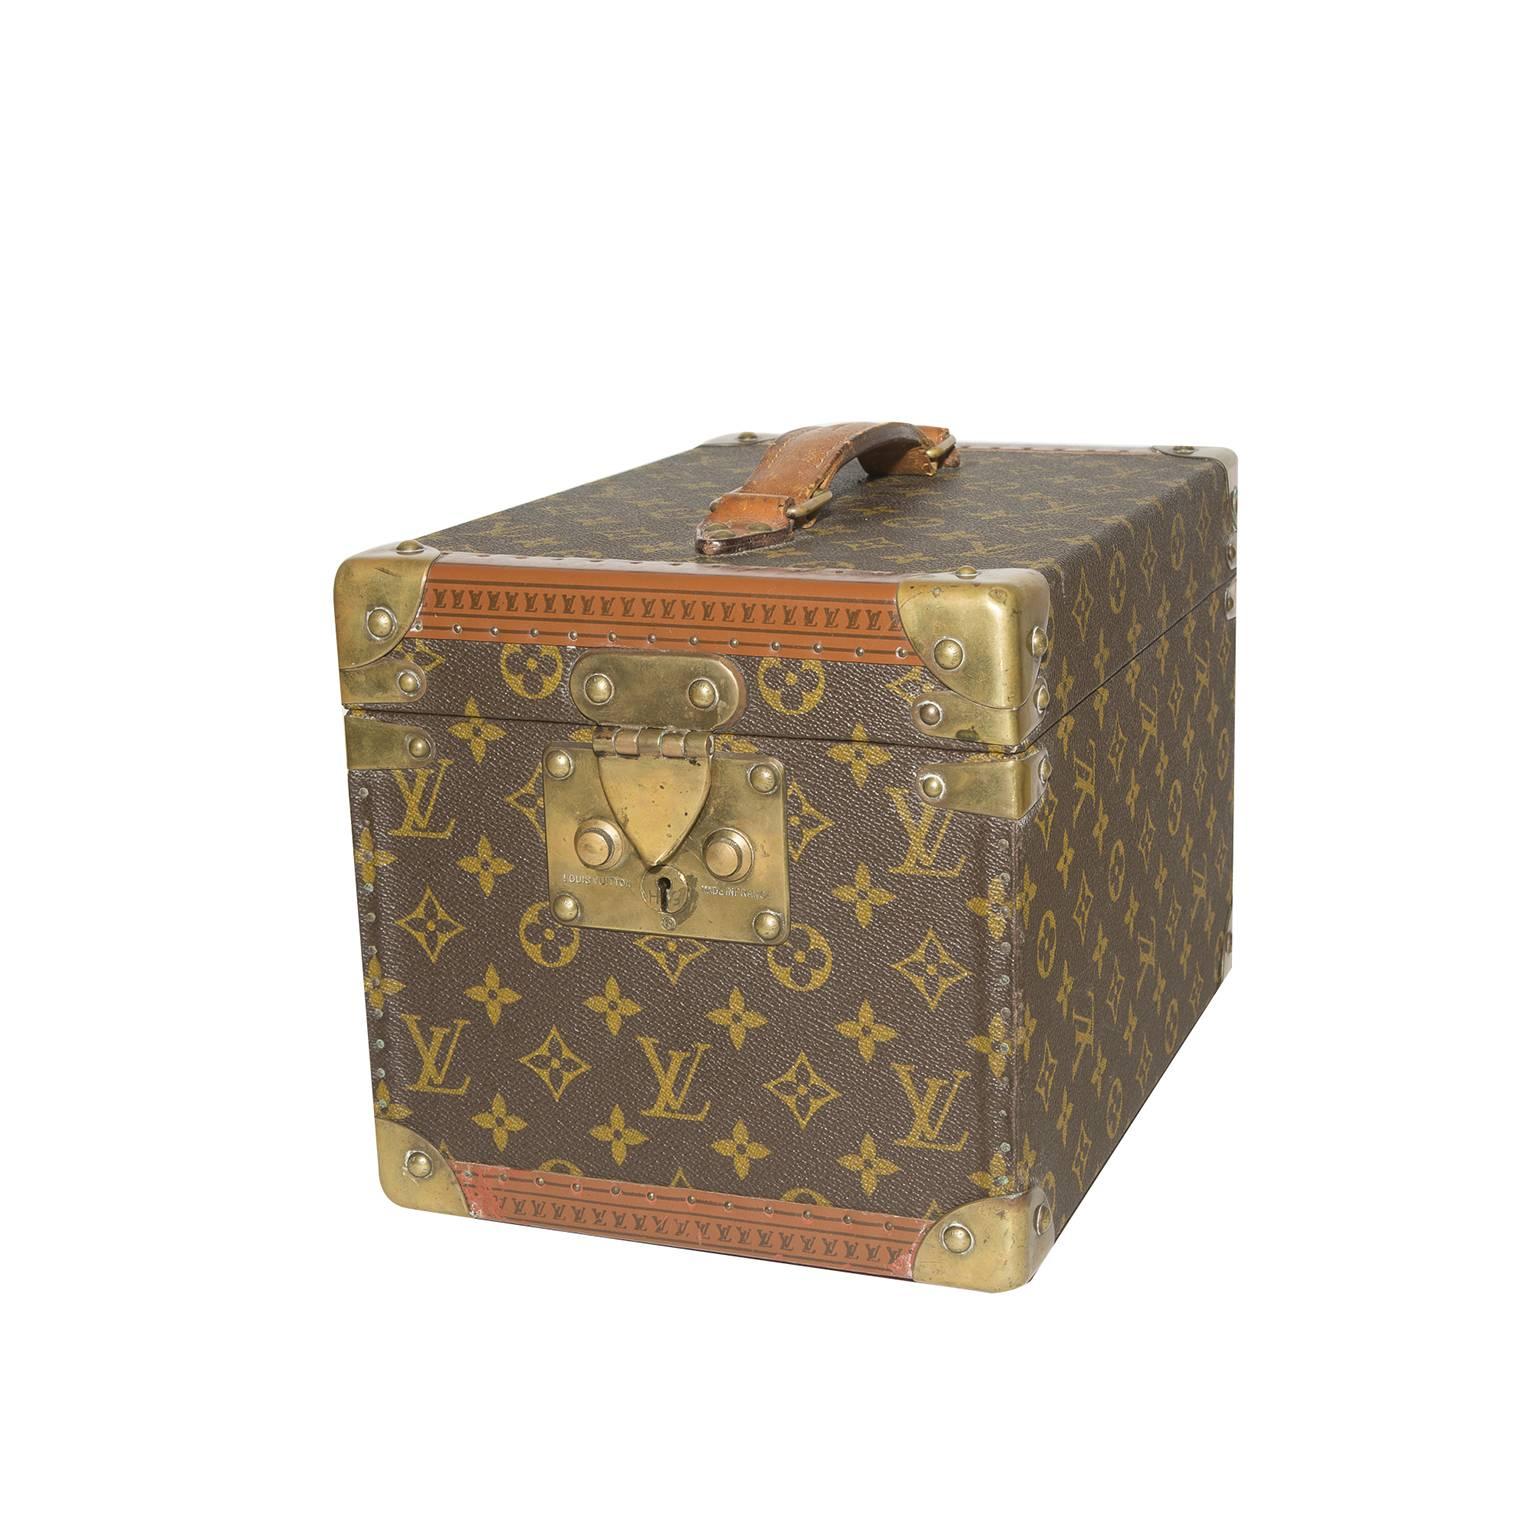 Stunning Louis Vuitton beauty case, internal jewel box with key.